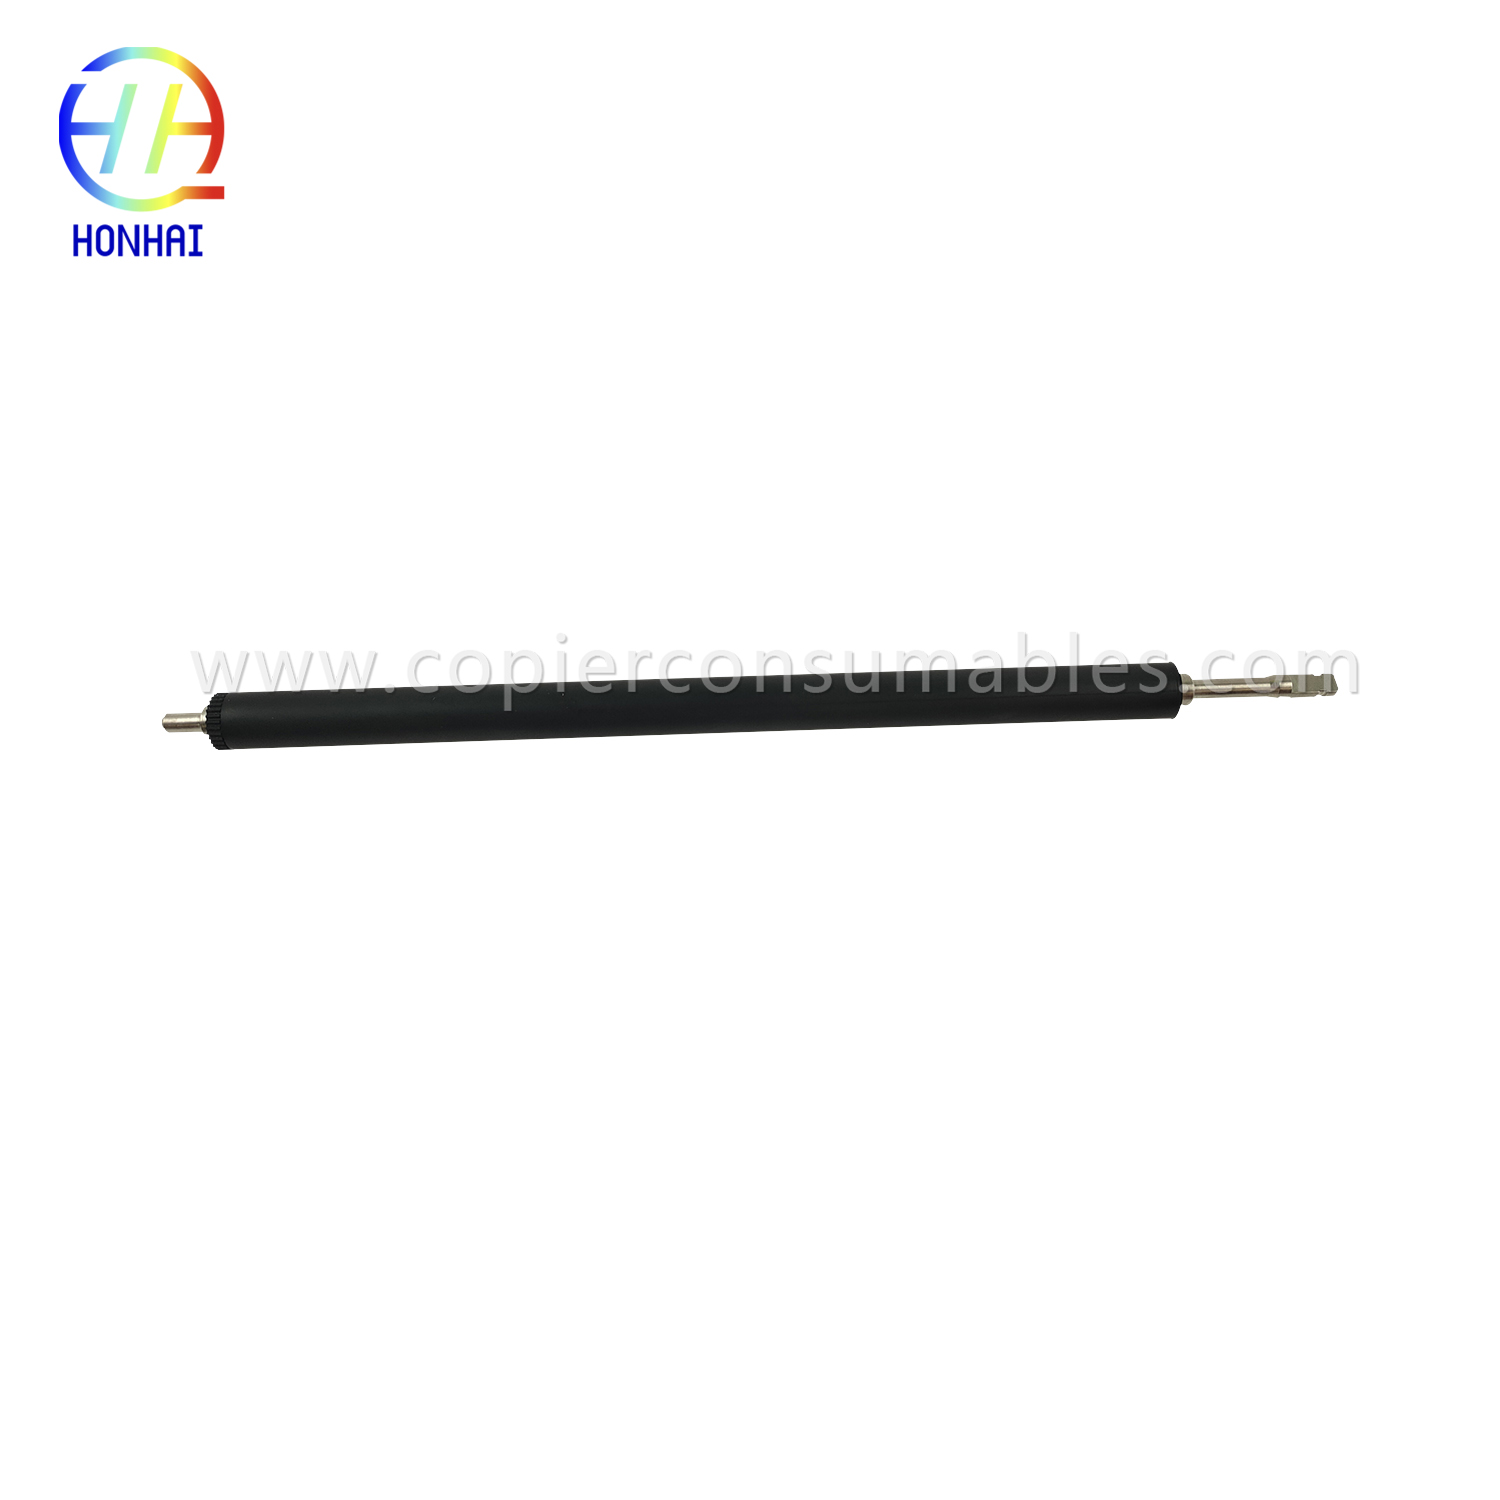 High Quality for No Heat Hair Rollers - Preasure Roller for HP M227FDW M230sdn 104a 106 132A M203 – HONHAI